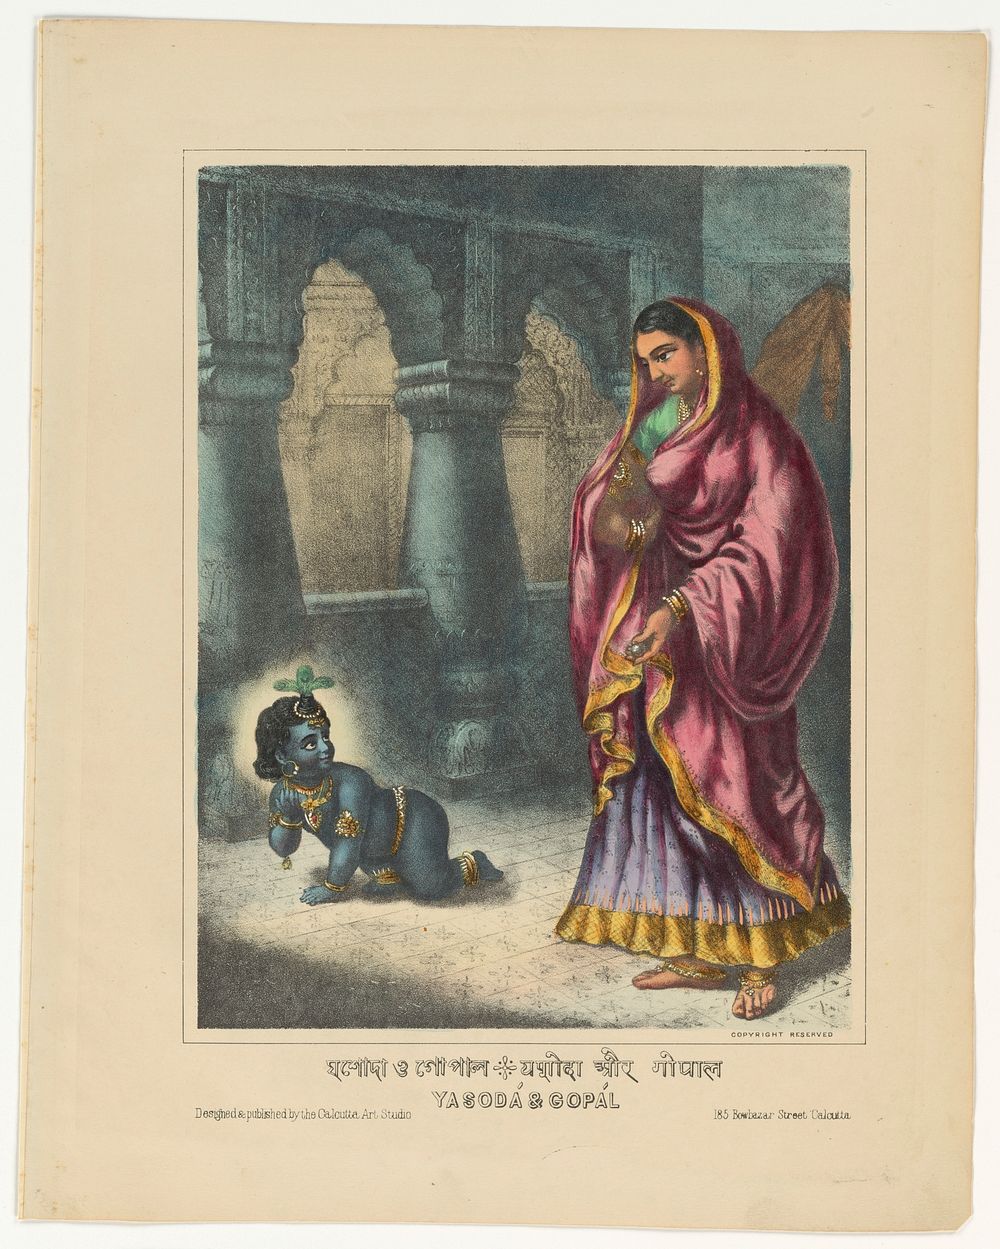 Yashoda and Gopal, West Bengal, Calcutta